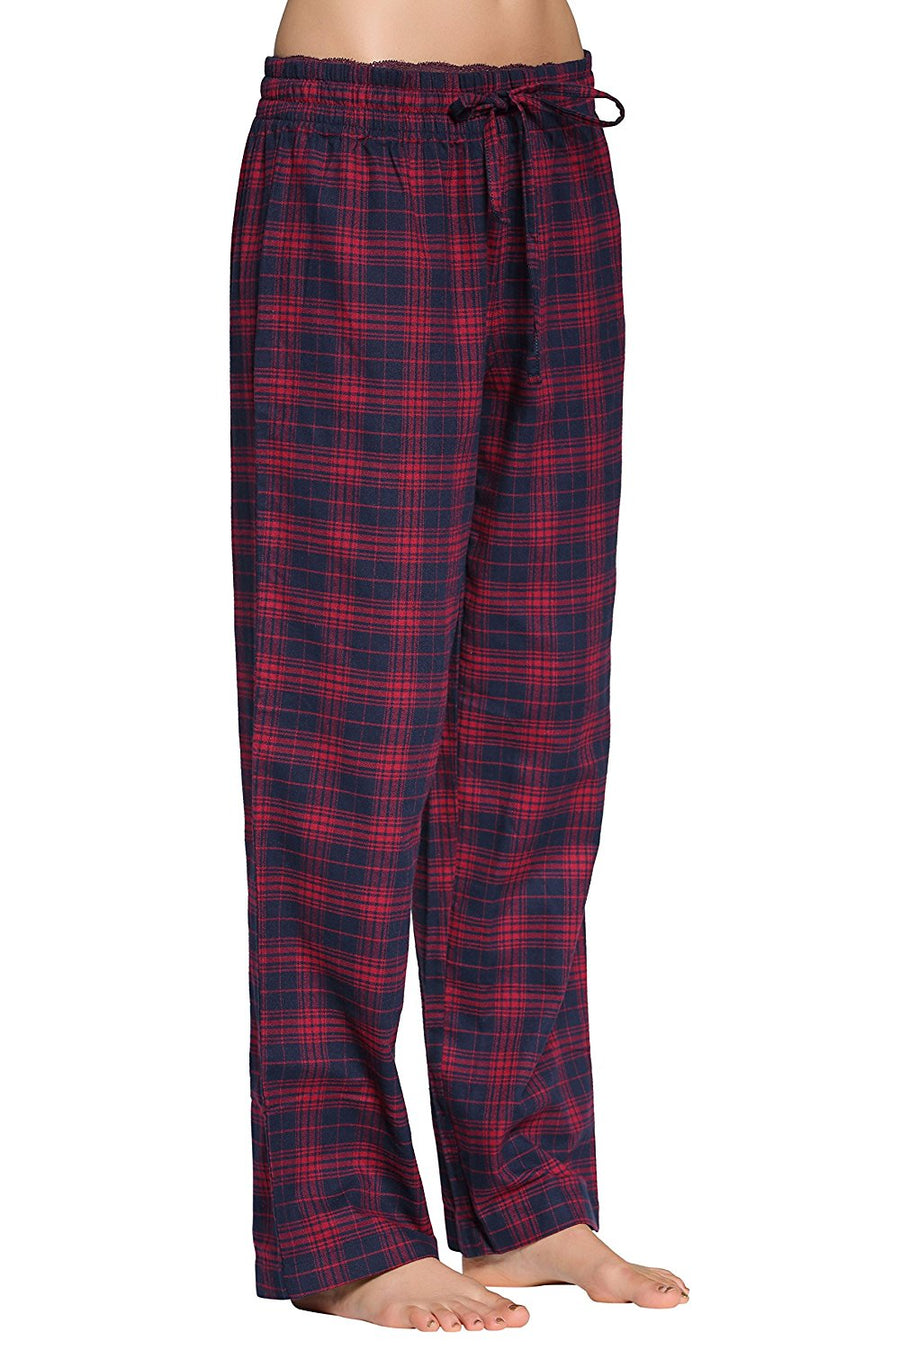 Pajama Pants for Women - 3 Pack Pajama Bottoms - Cotton Blend Flannel Plaid  Lounge Pants, Comfortable PJ Pants (Set B, X-Large) at  Women's  Clothing store